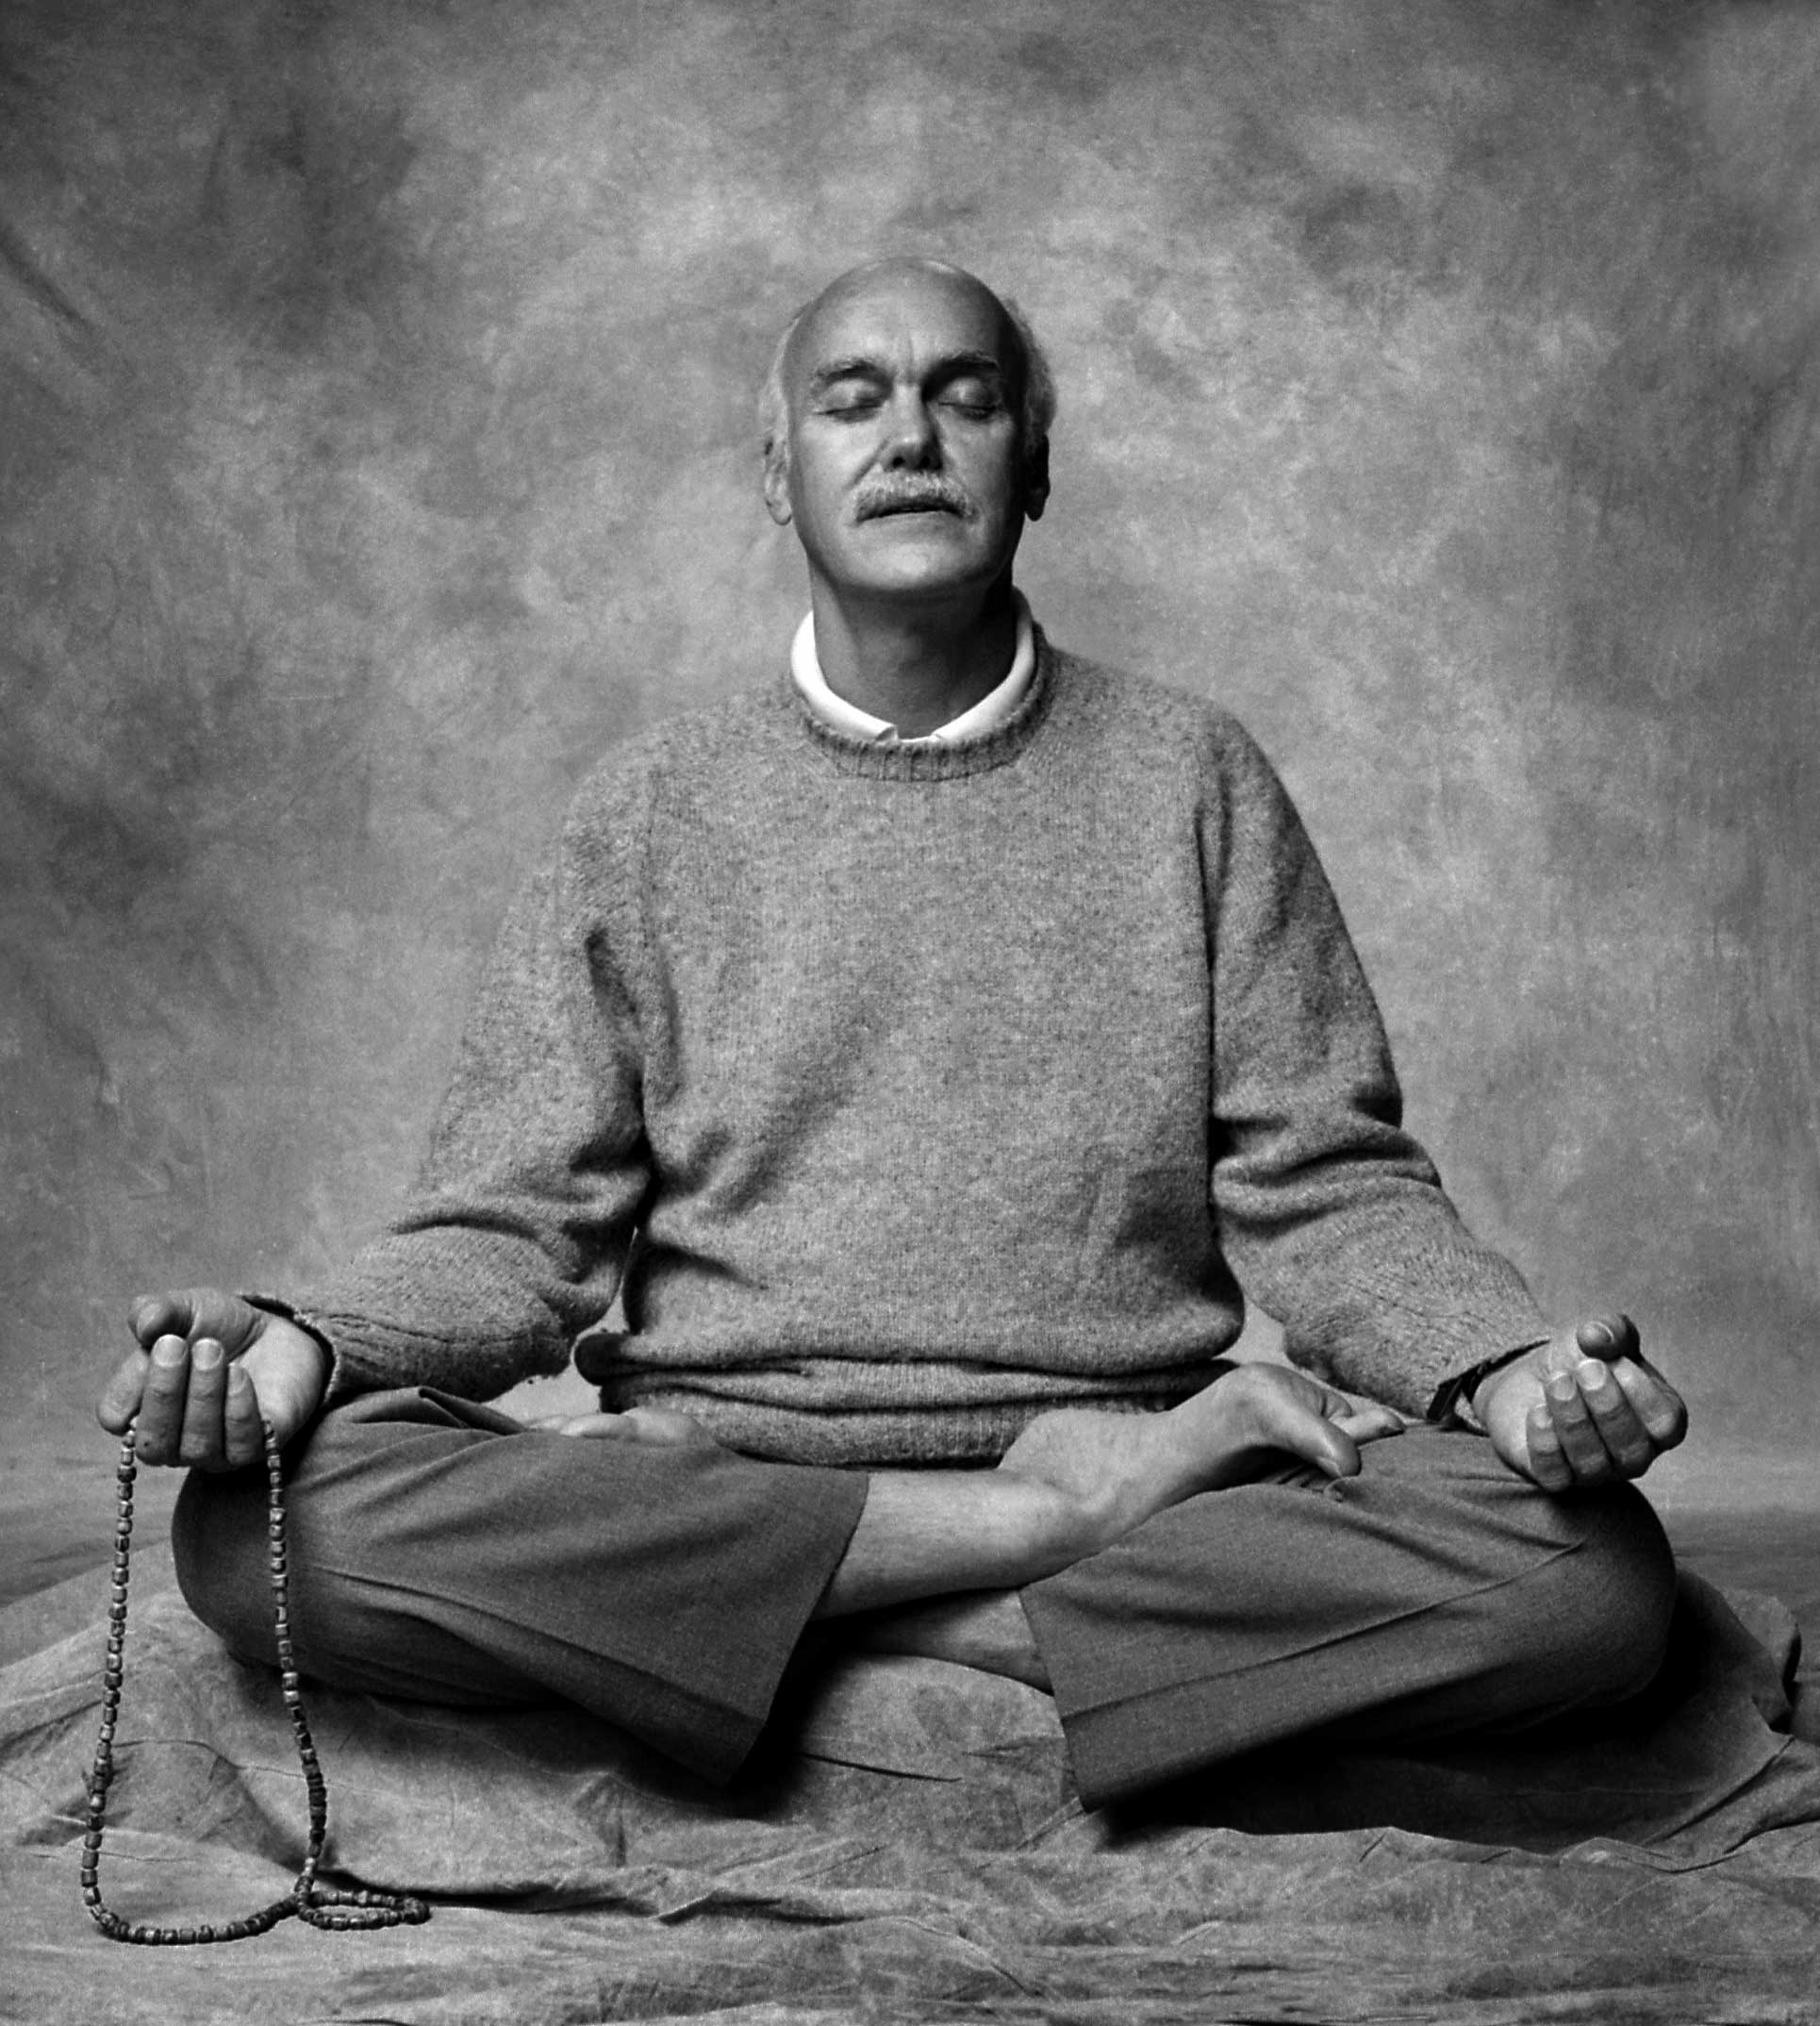 Ram Dass Sitting in Meditation with Mala